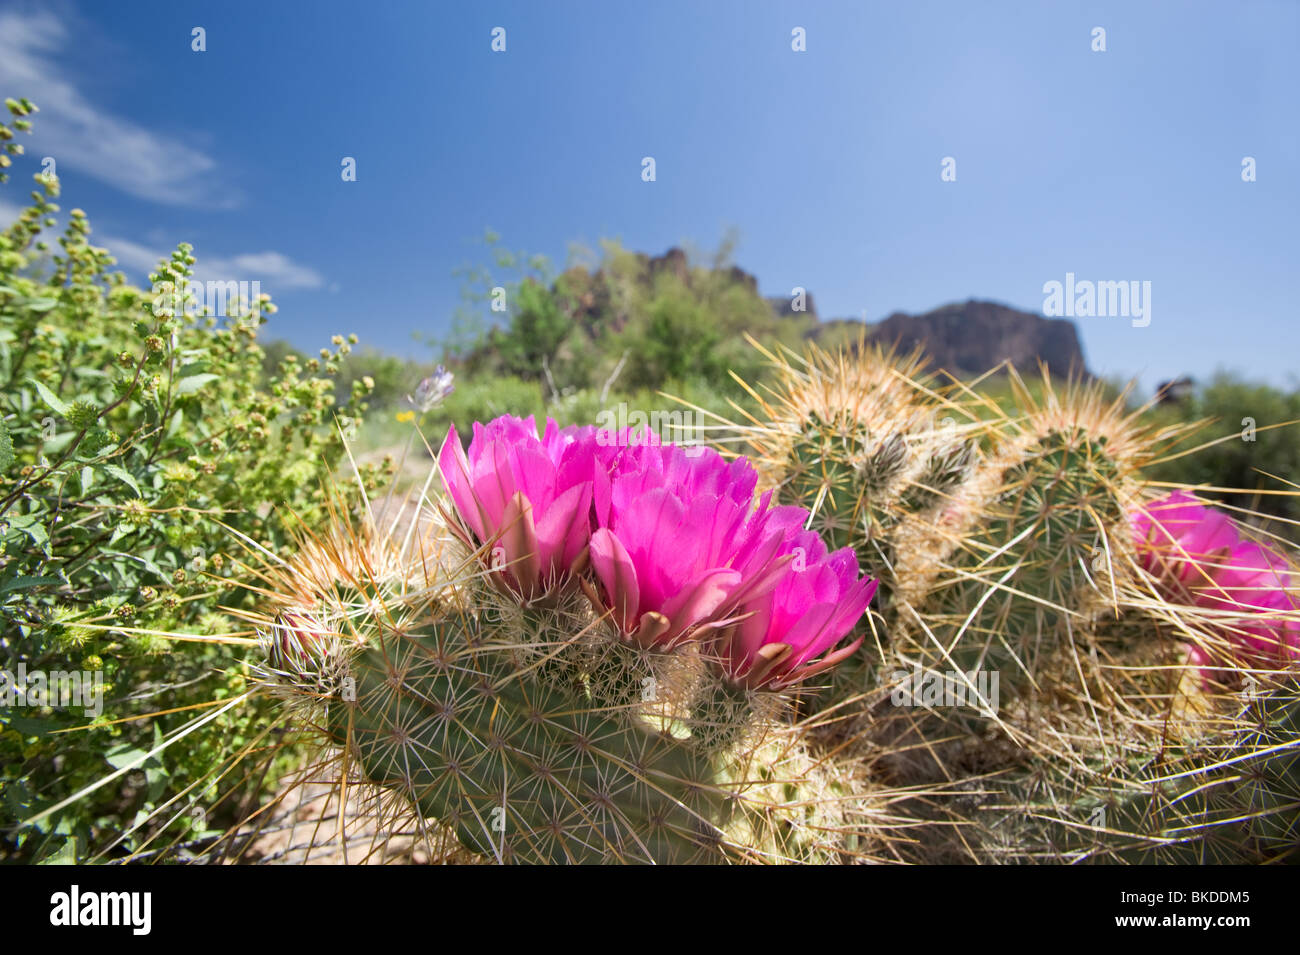 Blooming cactus flowers in an Arizona desert. Stock Photo